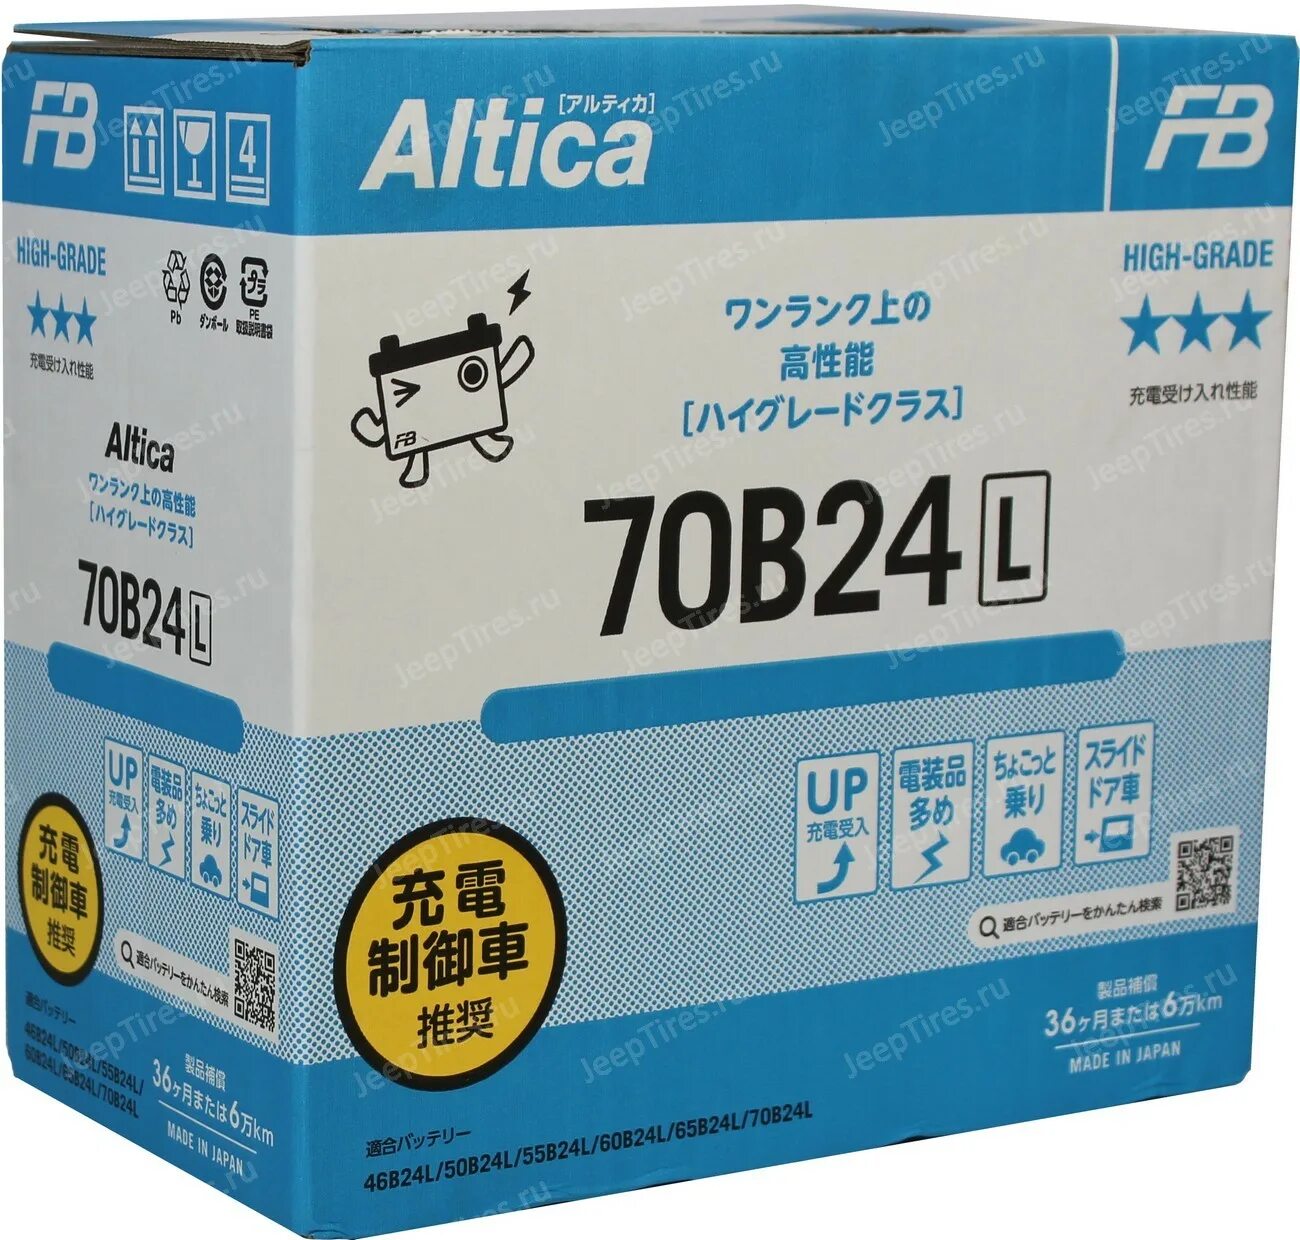 Аккумулятор fb Altica High-Grade. Furukawa Battery fb 70b24r Altica. Fb Altica High-Grade. Fb Altica High-Grade 50 Ач 70b24l. Furukawa battery altica